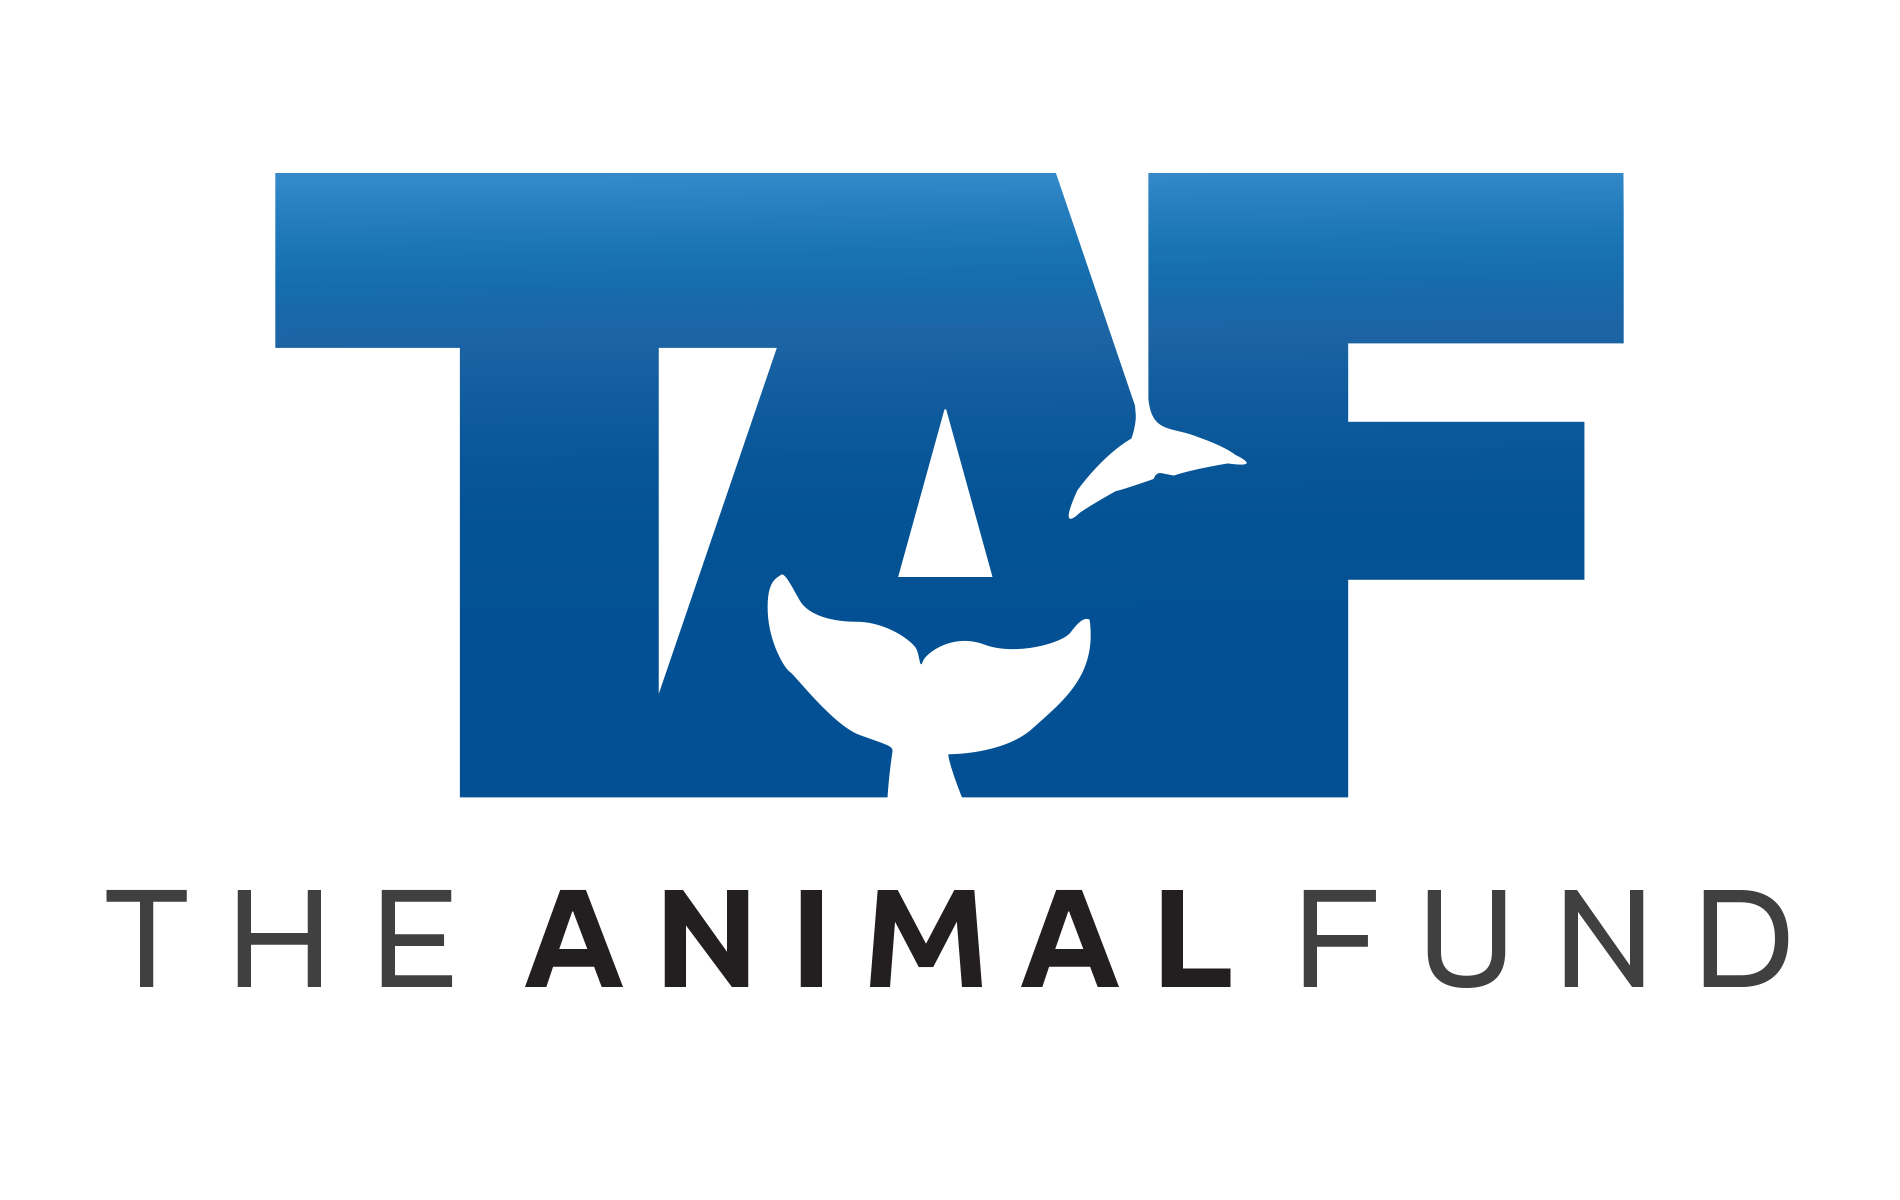 The Animal Fund logo